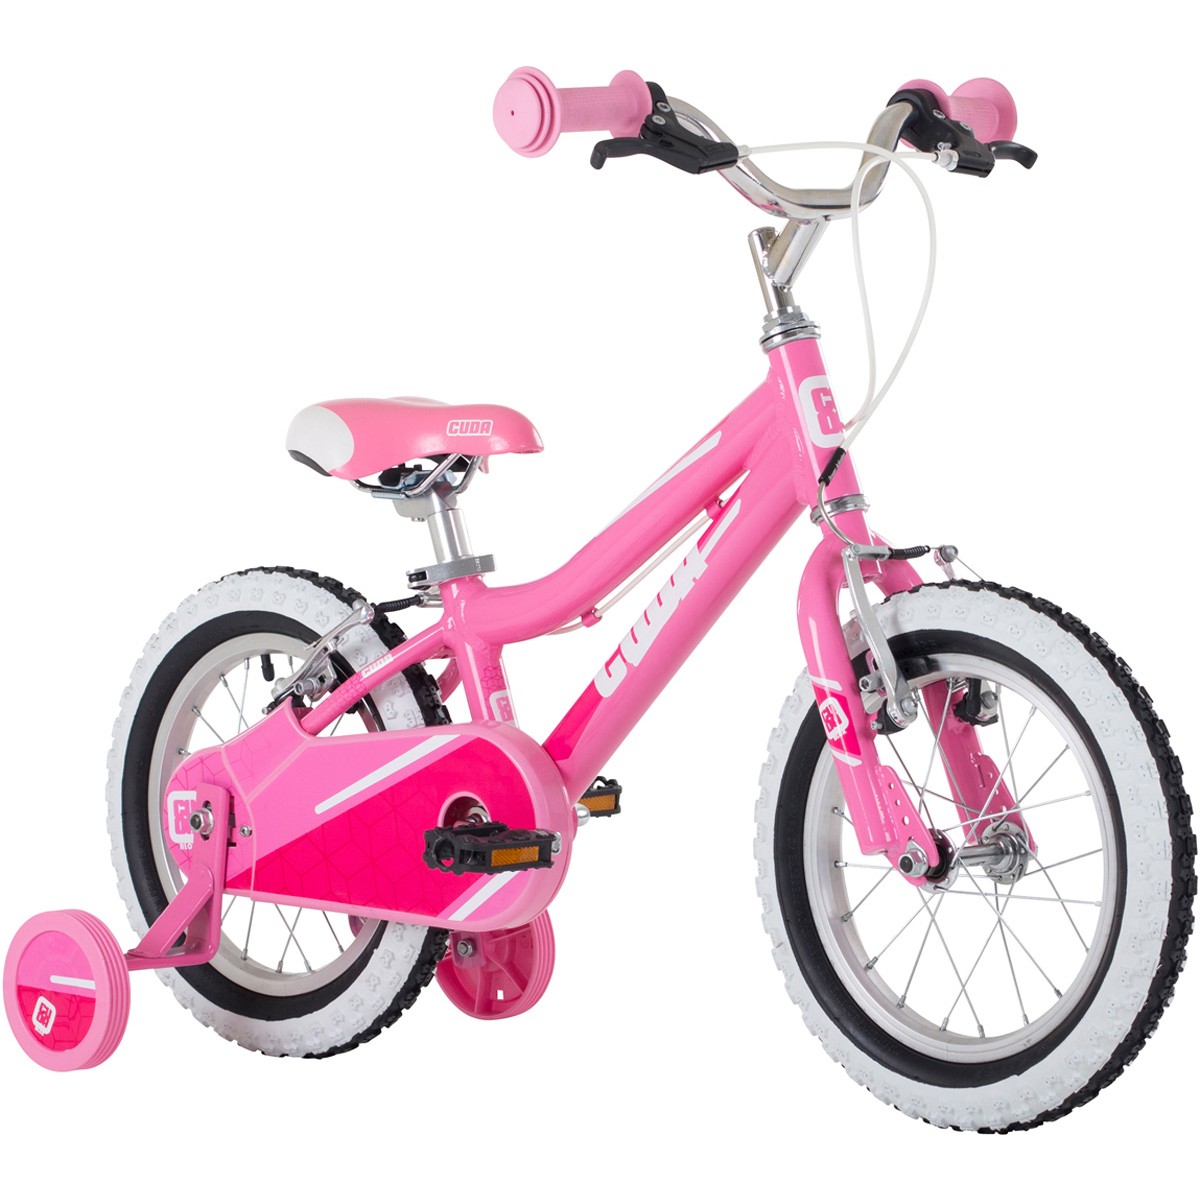 bike for girl age 7